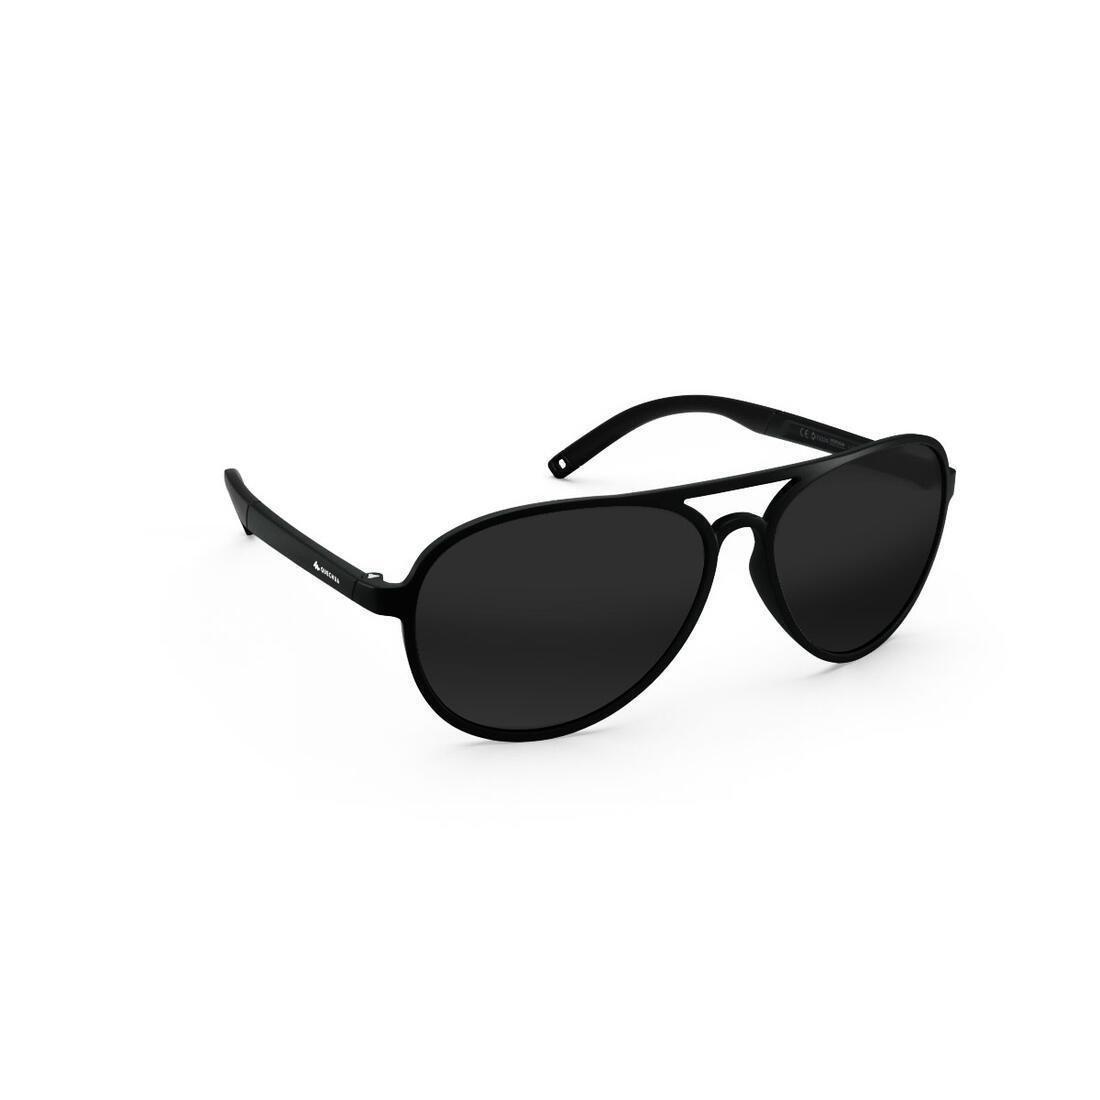 QUECHUA - Category 3 Mh 500 Polarised Hiking Sunglasses, Black